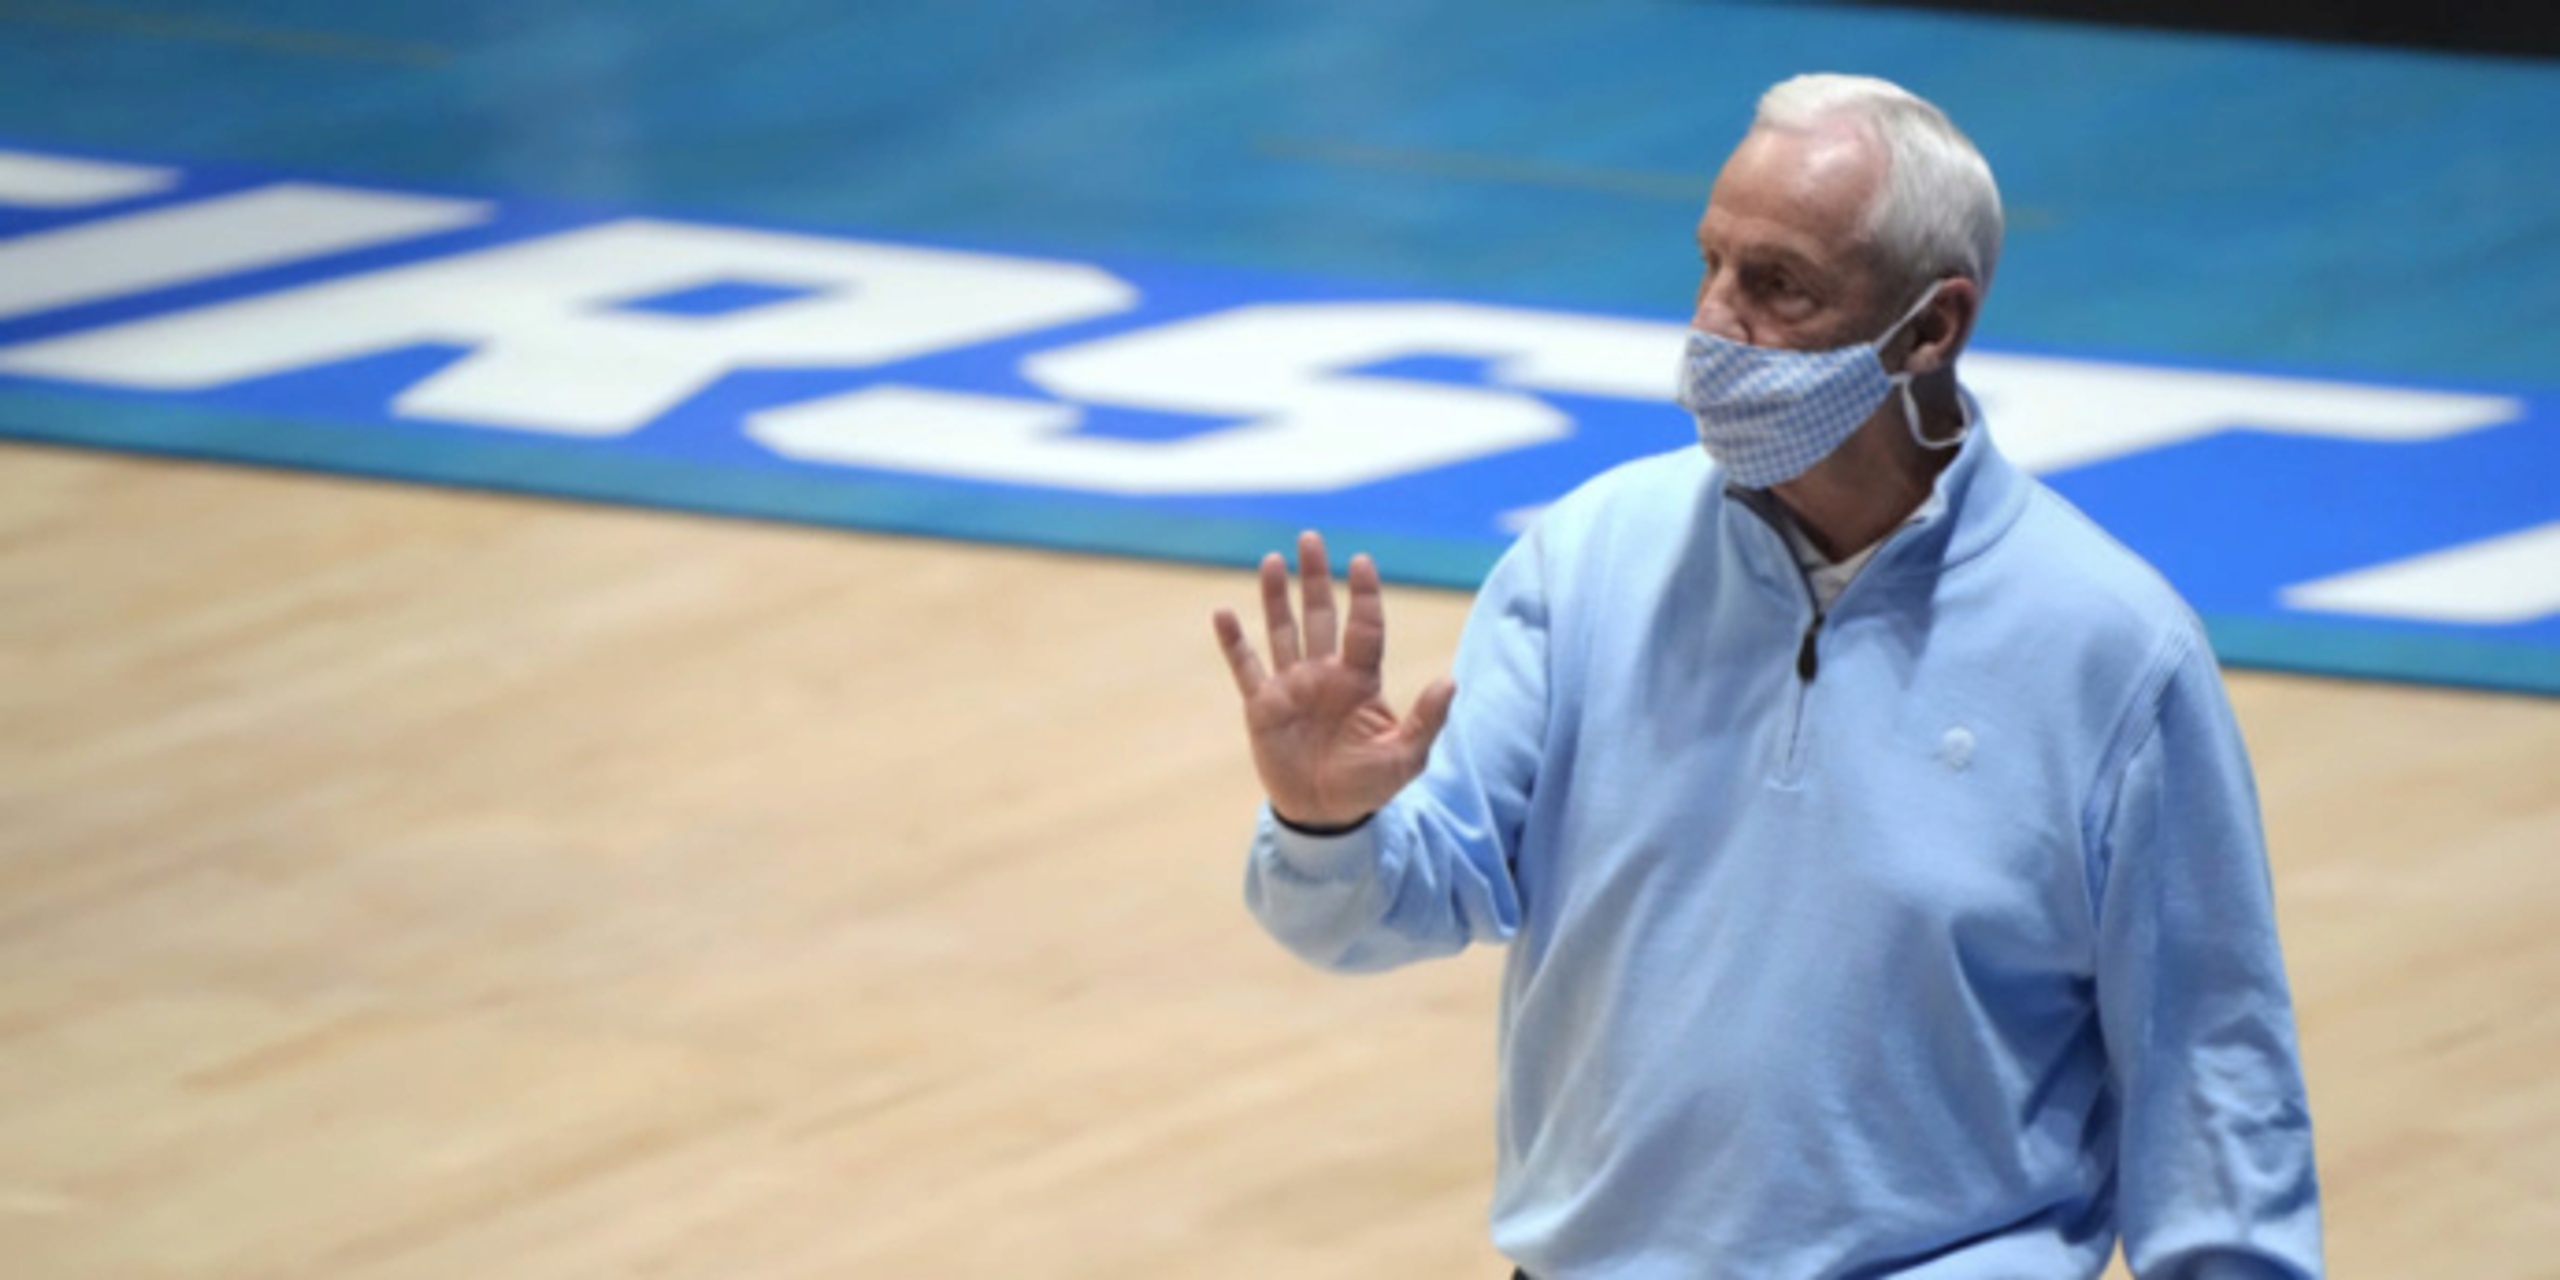 North Carolina head coach Roy Williams to retire from coaching